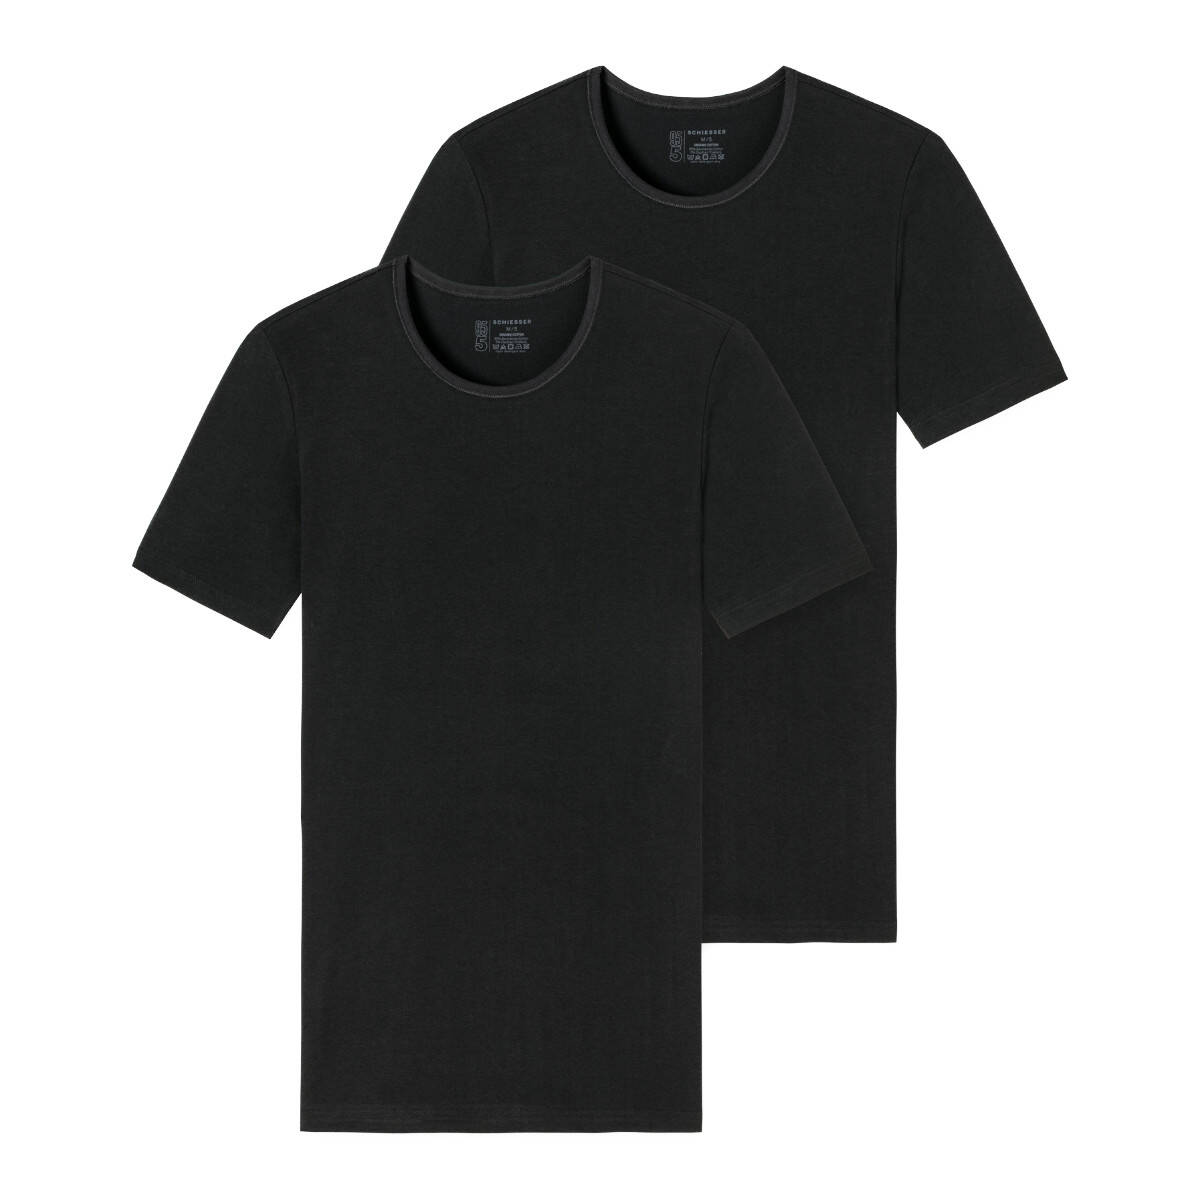 4 Schiesser 95/5 PIMA  V-Shirt  T-Shirt  weiß schwarz  Gr S    NEU 